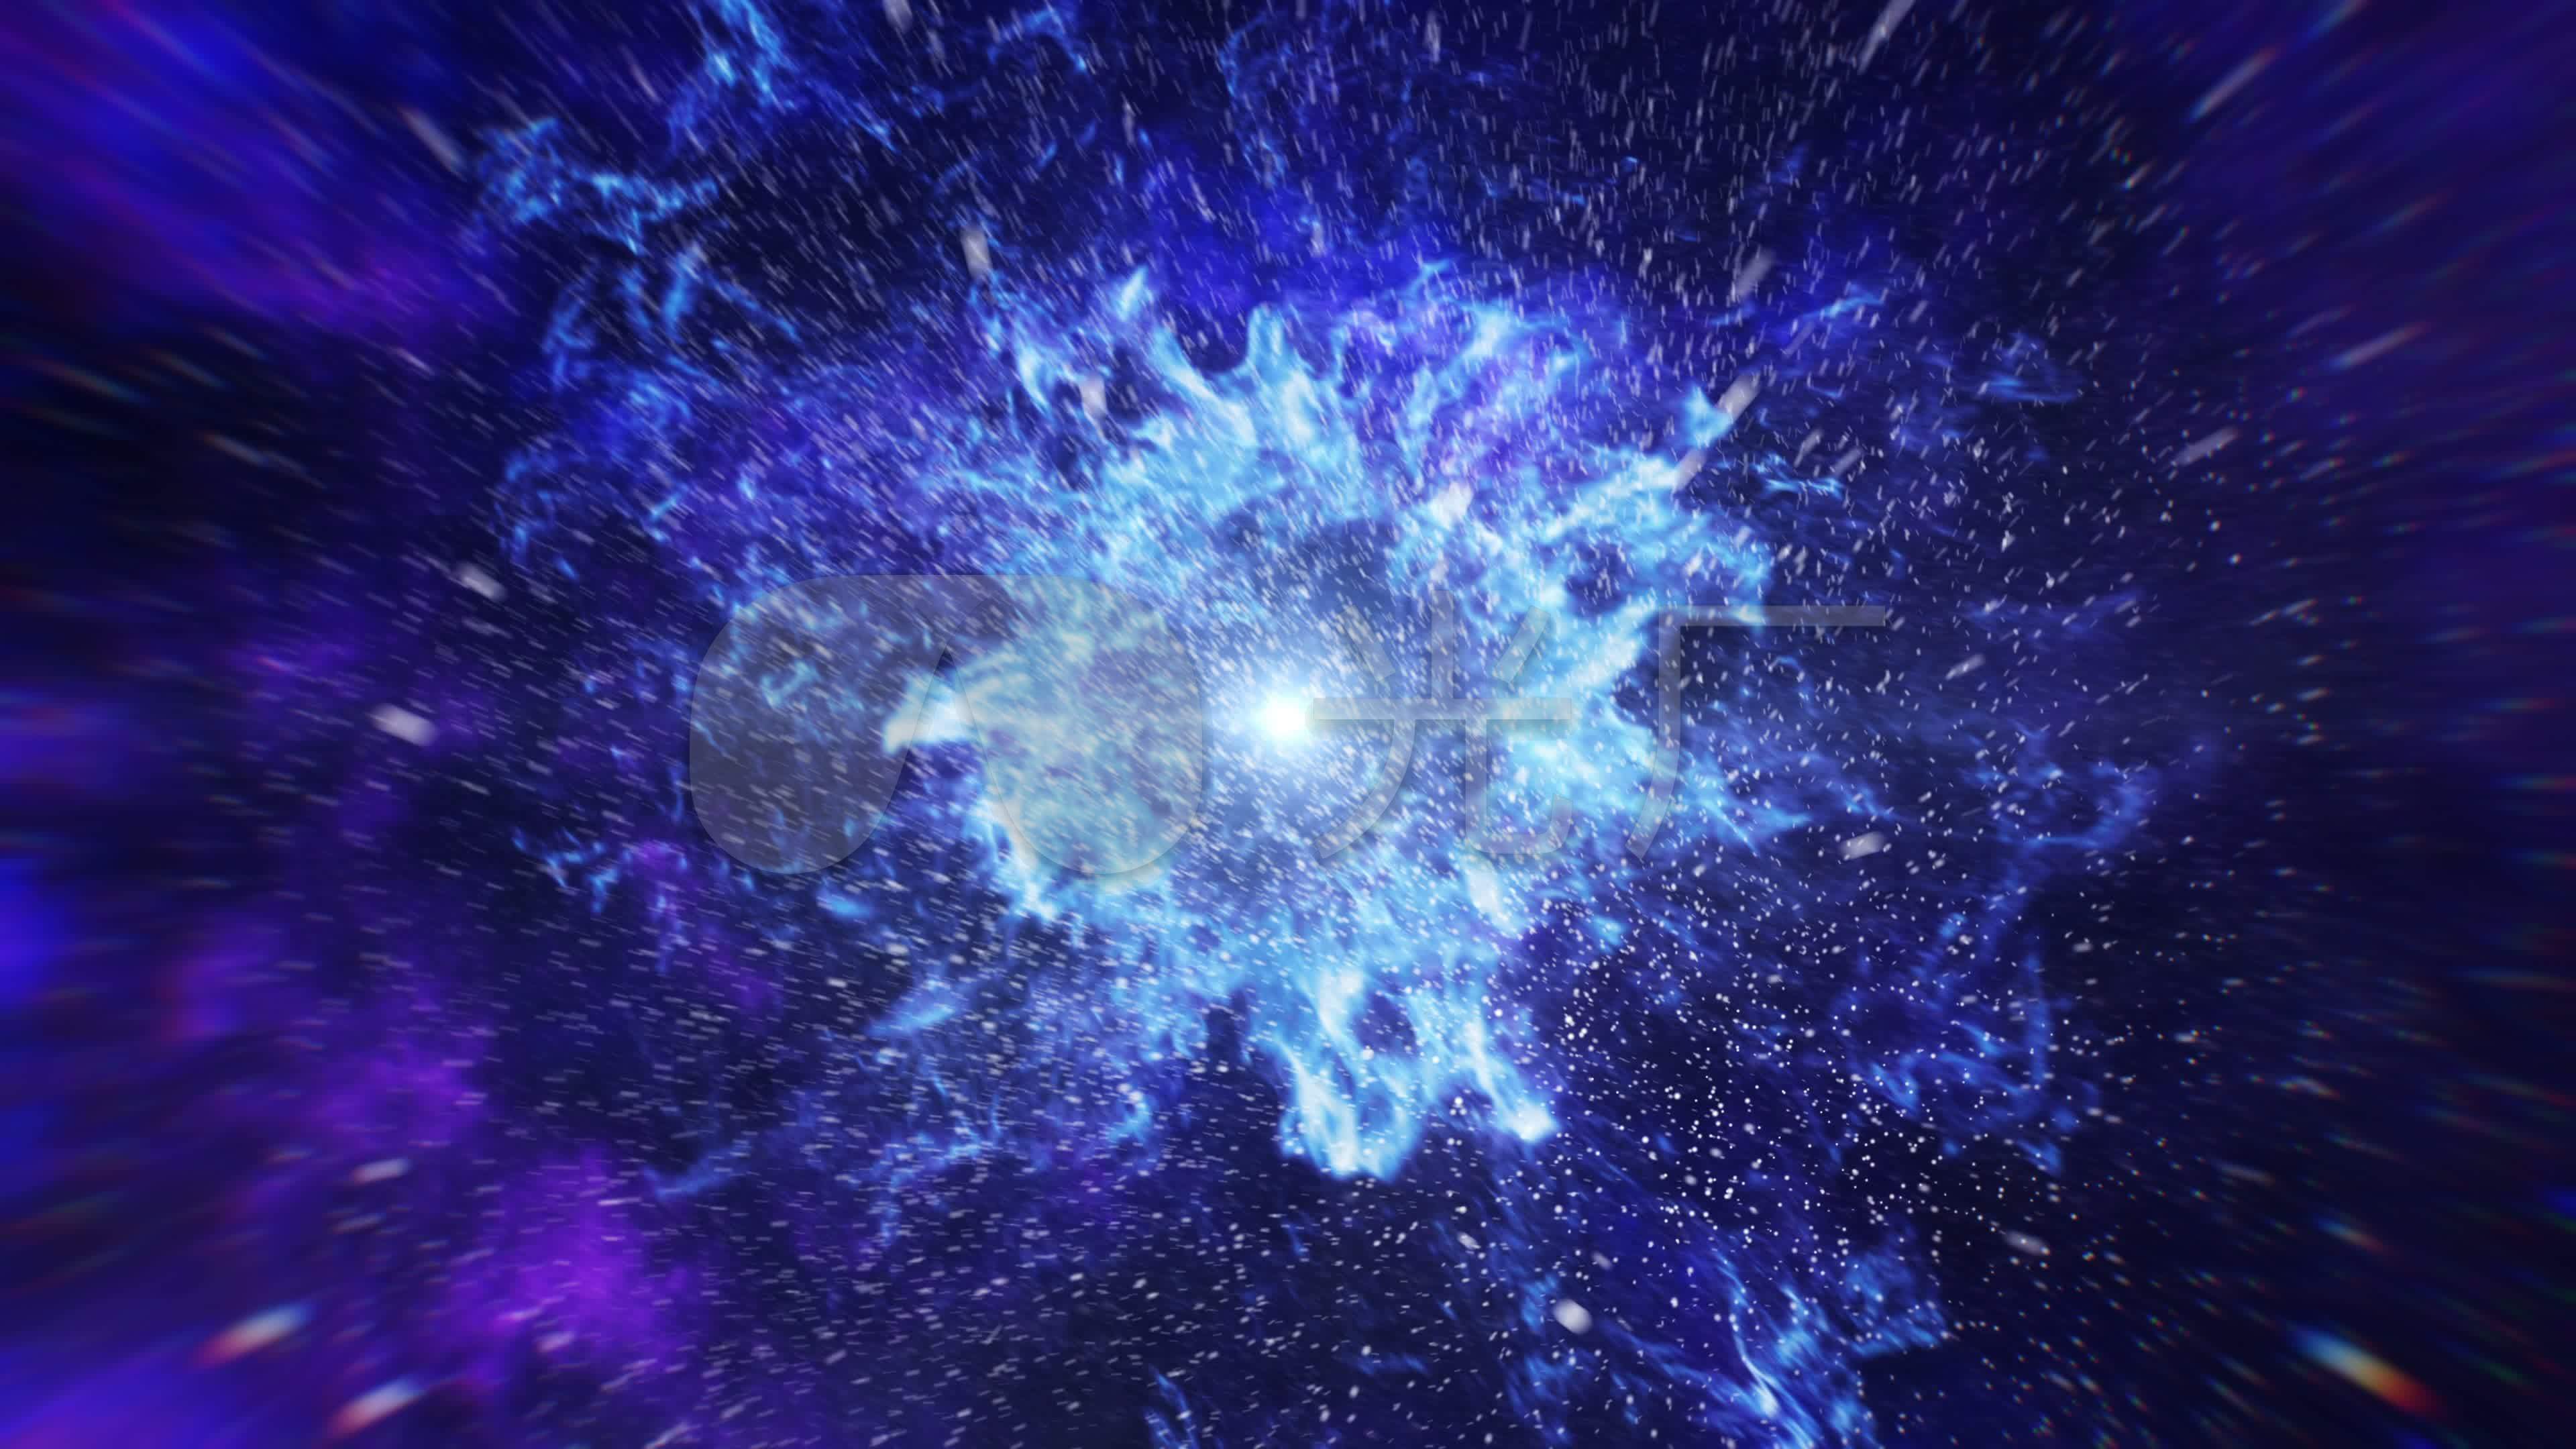 Supernova Explosion Wallpaper - WallpaperSafari